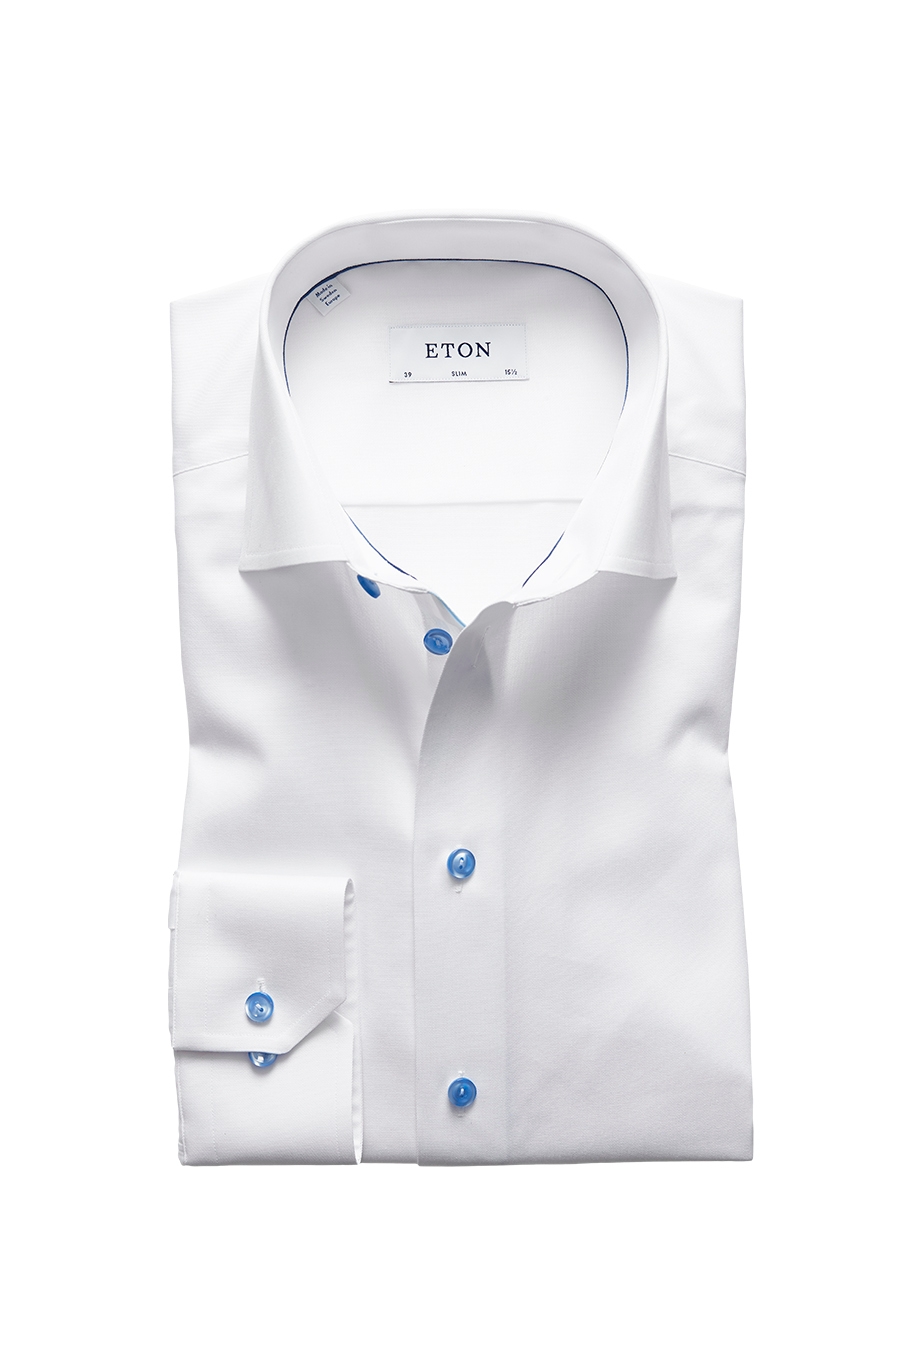 Eton White twill shirt with blue details - slim fit - Harvey Nichols